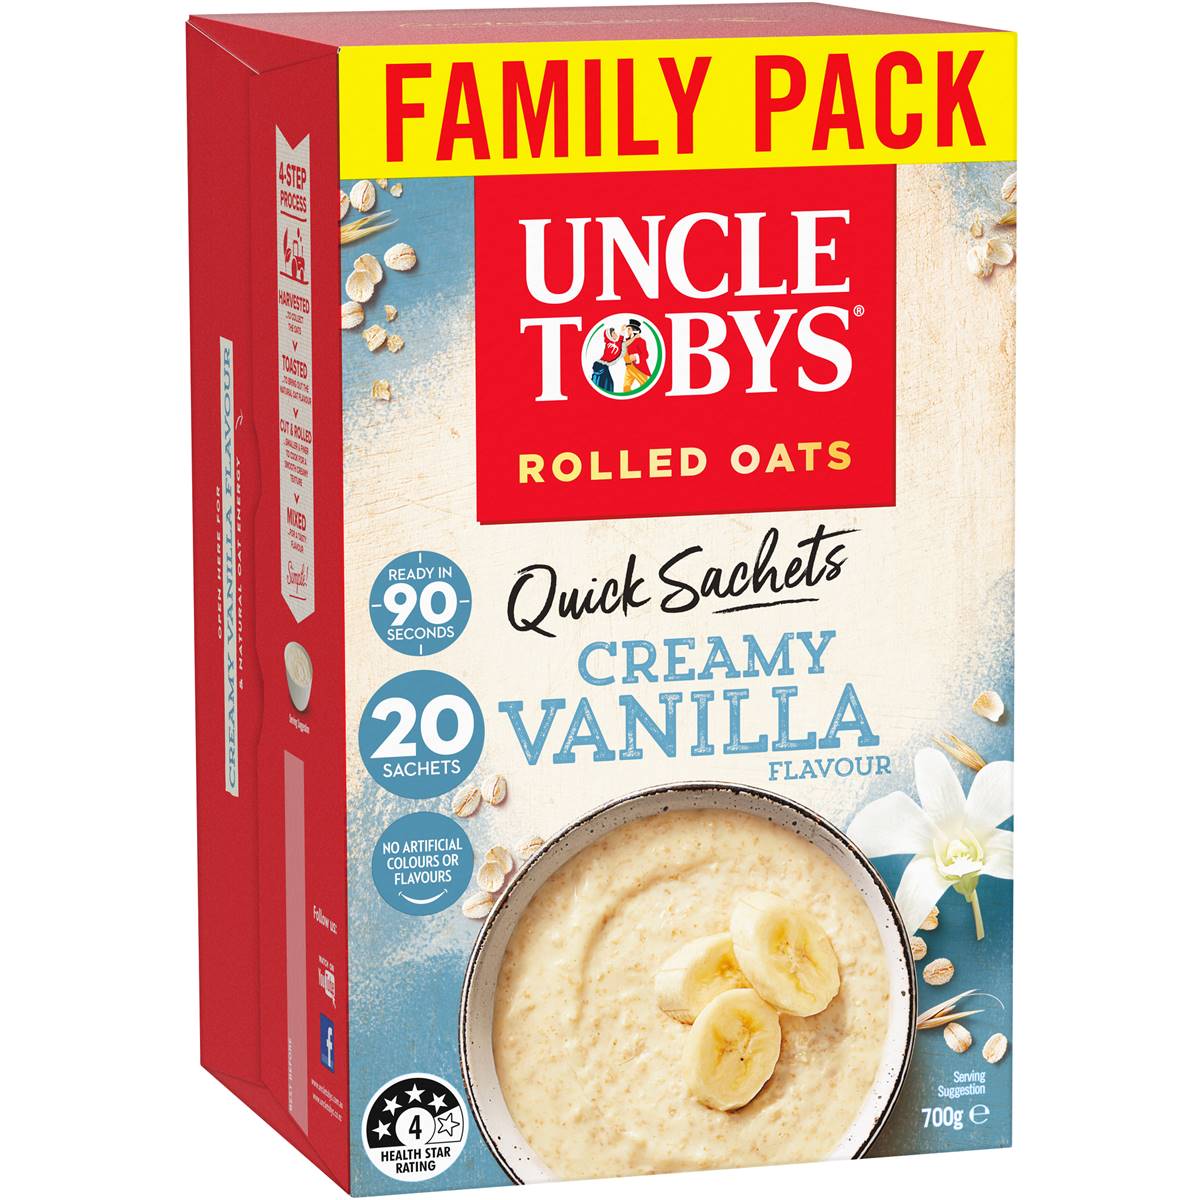 Calories in Uncle Tobys Oats Porridge Quick Sachets Creamy Vanilla